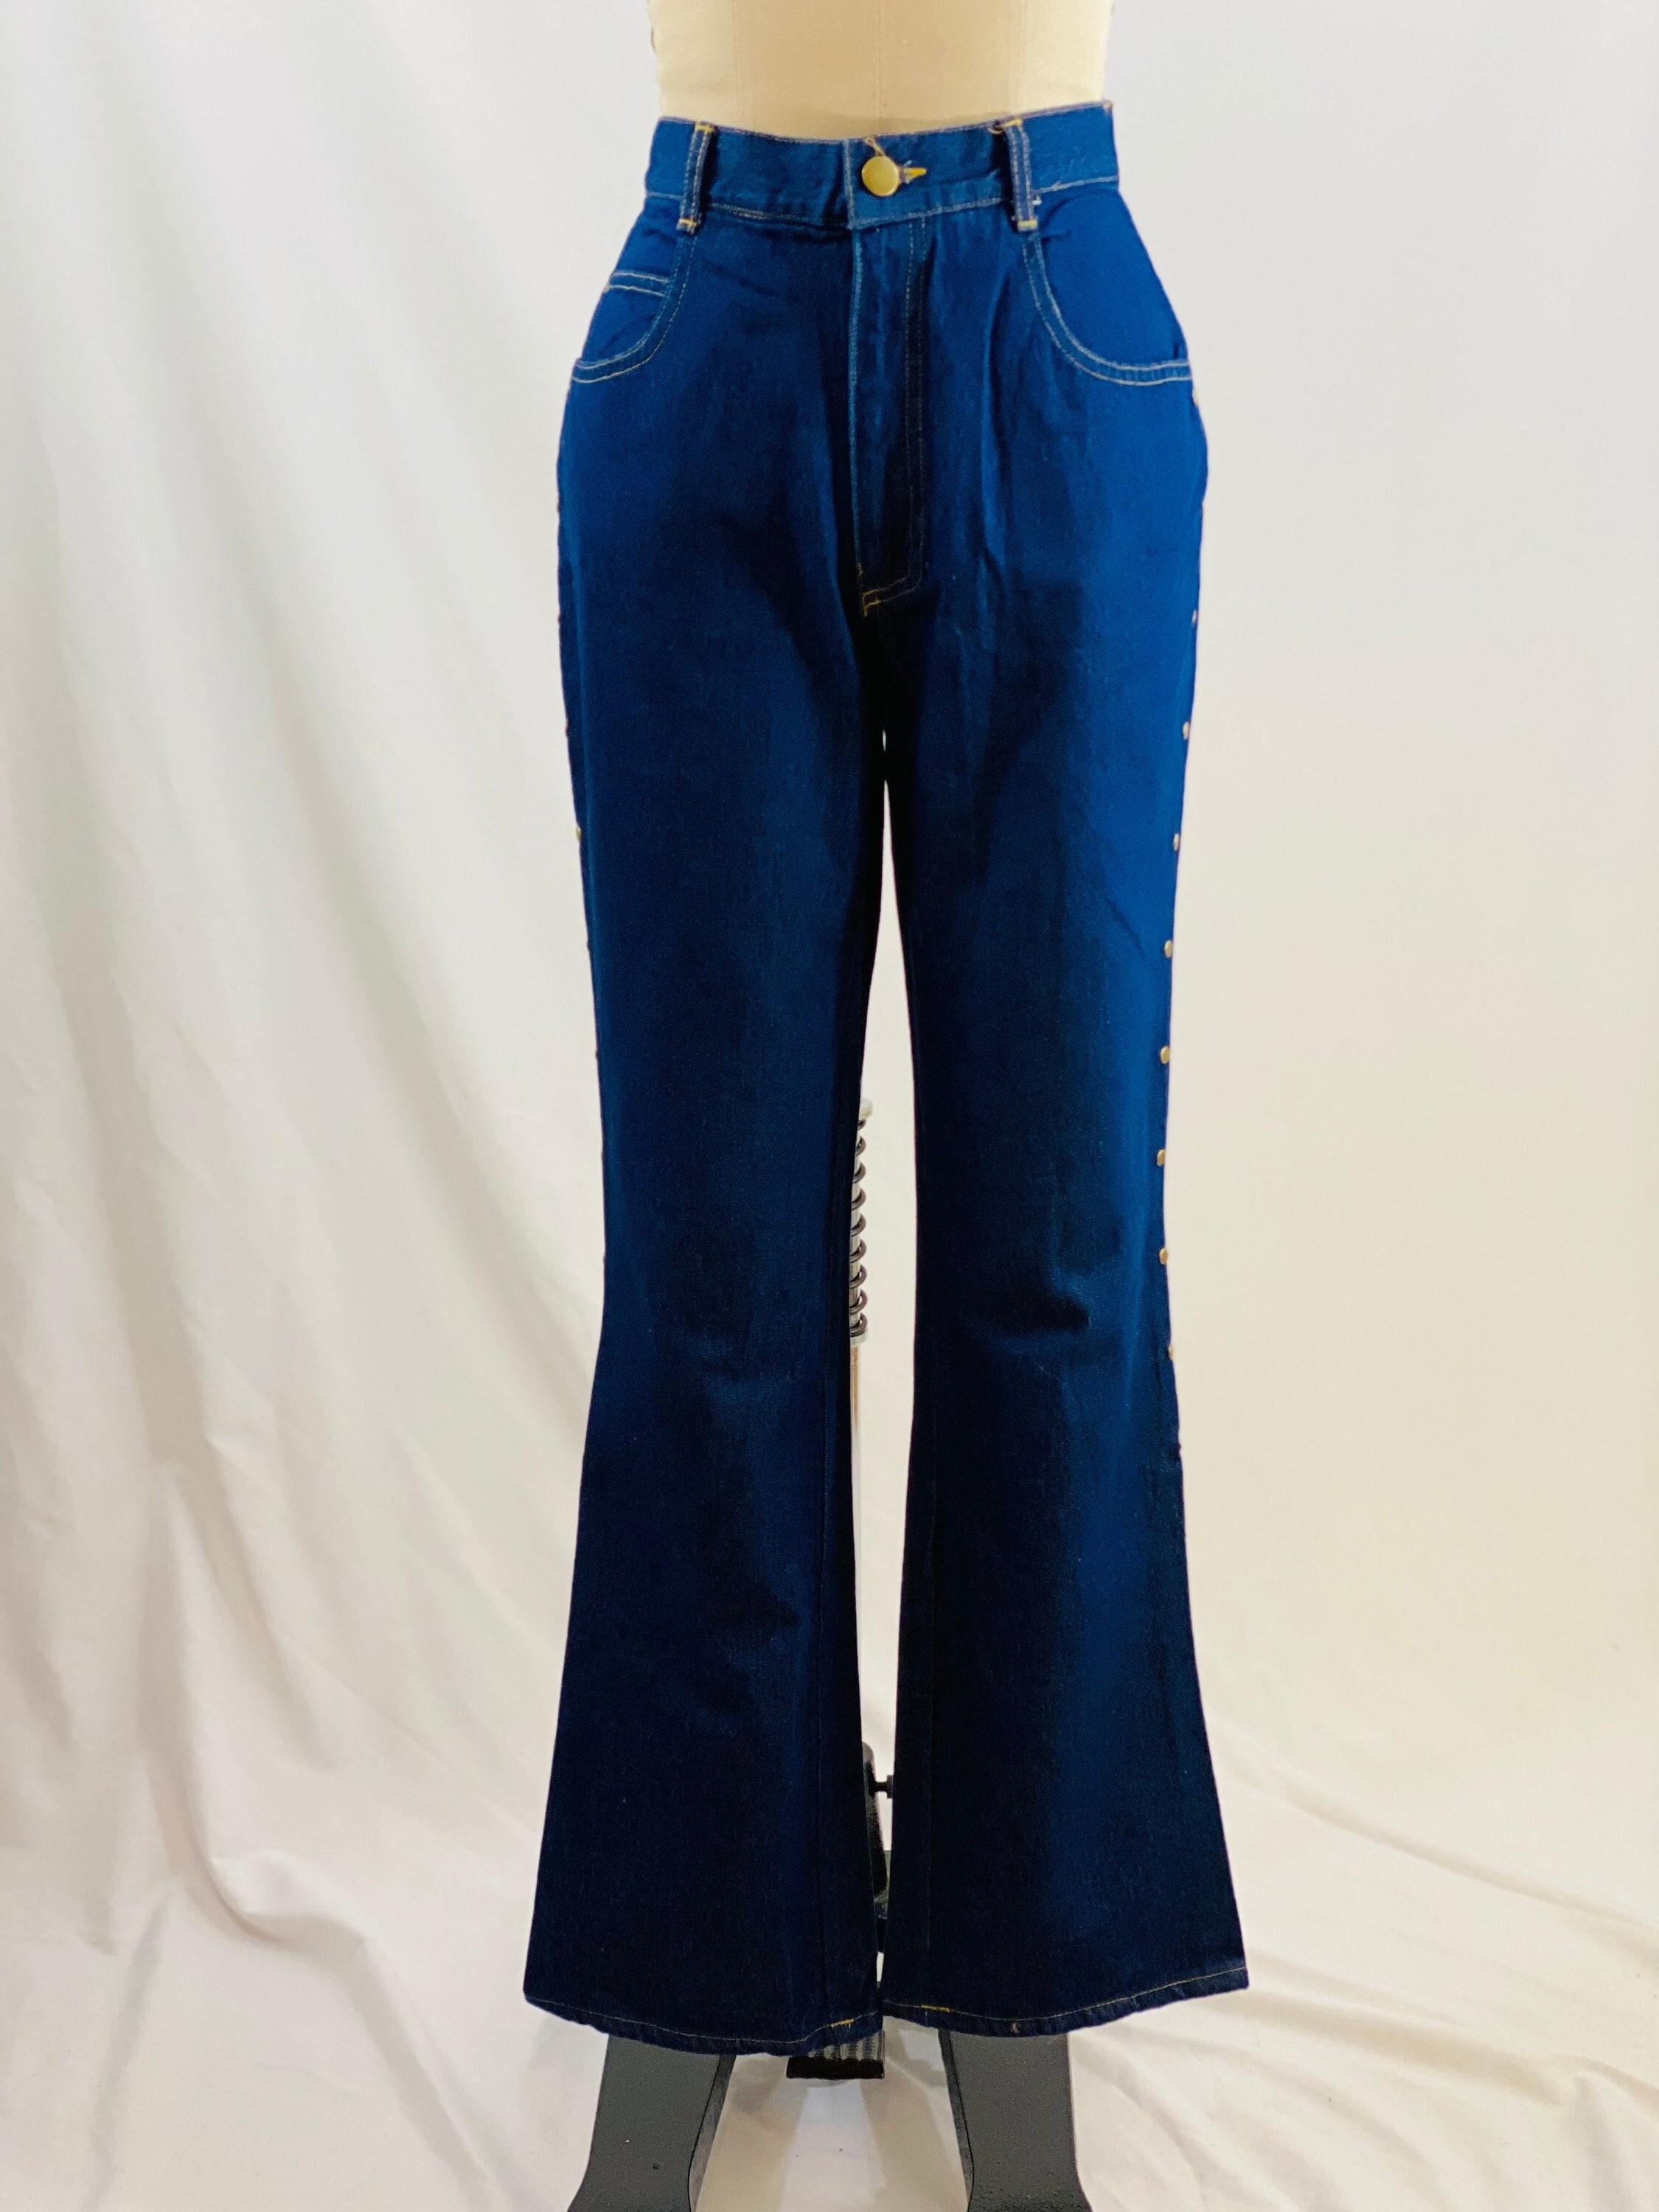 Vintage 70s High Waisted Flared Jeans Cotton Dark Wash Denim Jeans 27 Waist  -  Singapore